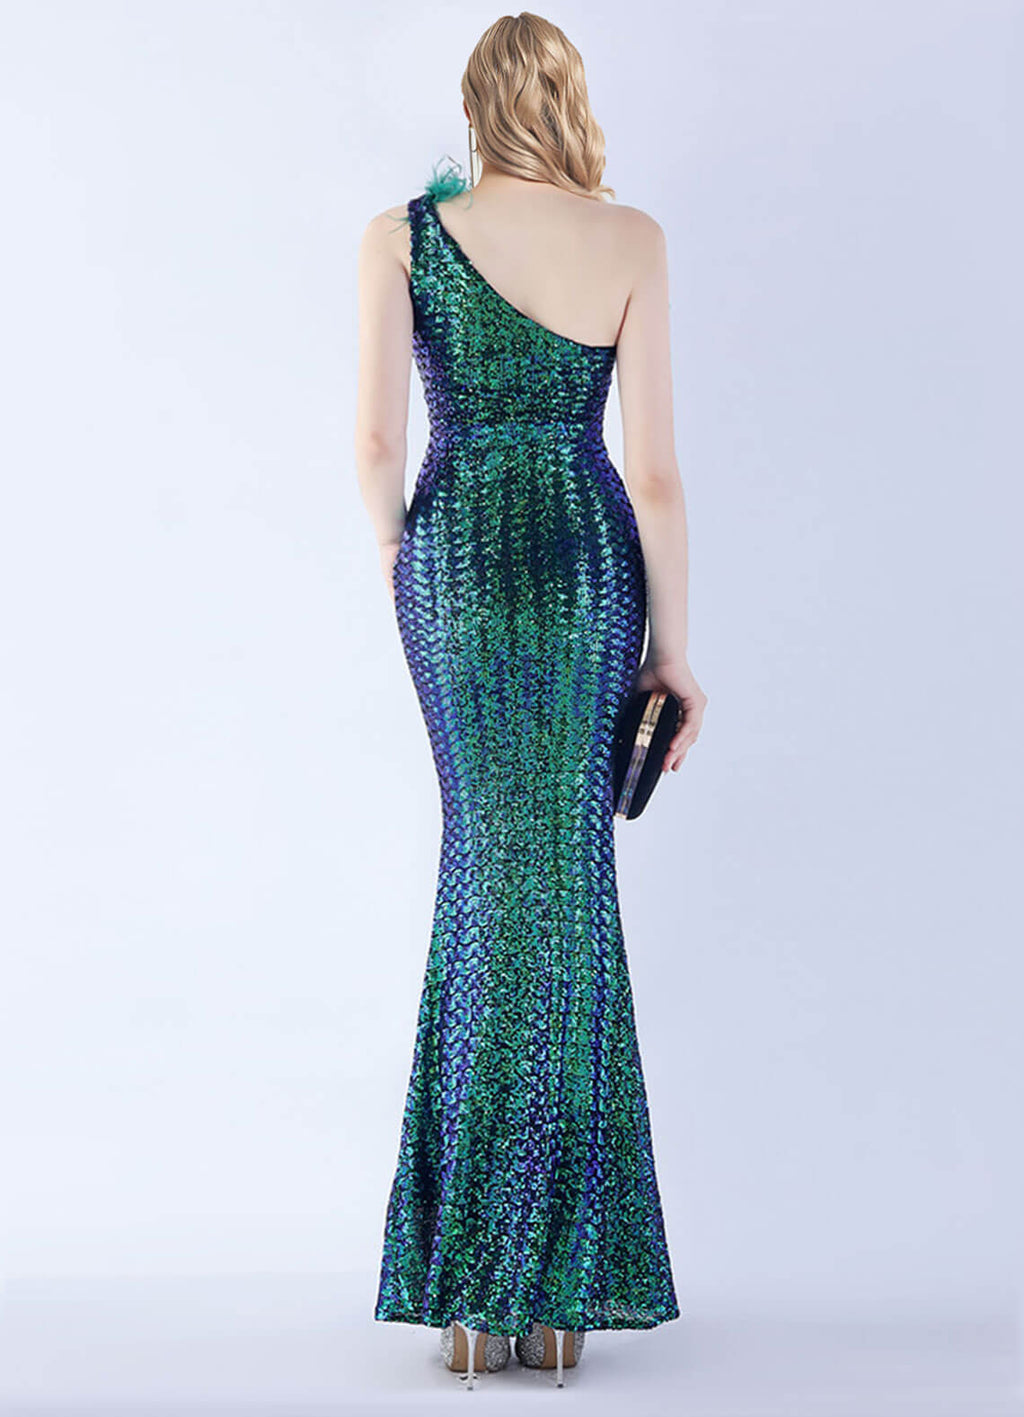 NZ Bridal Sequin Emerald Green One Shoulder Maxi Prom Dress 31359 Ruby a